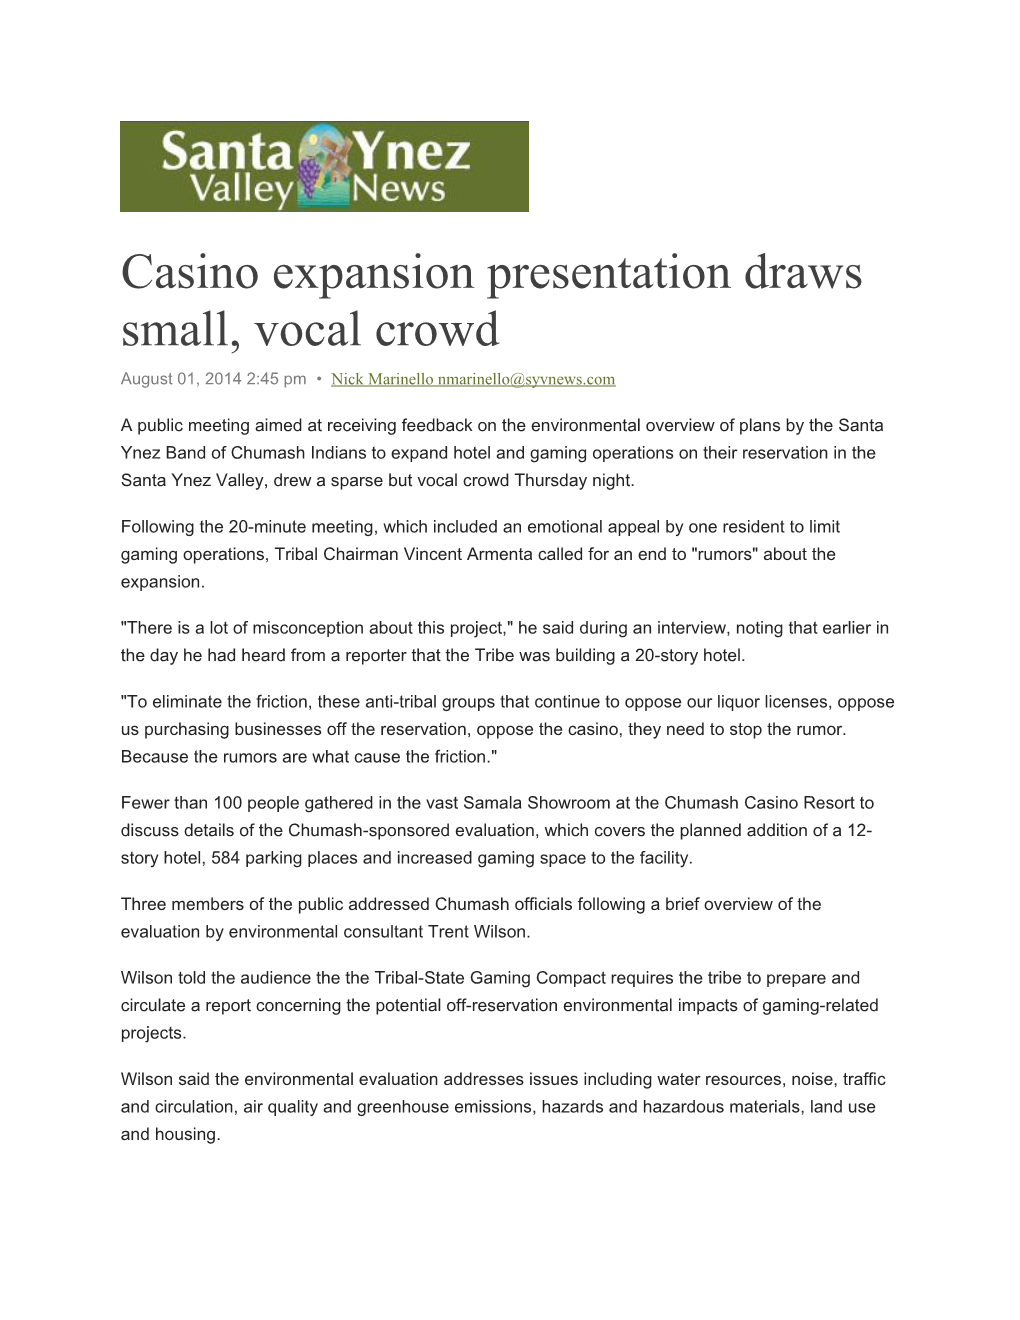 Casino Expansion Presentation Draws Small, Vocal Crowd